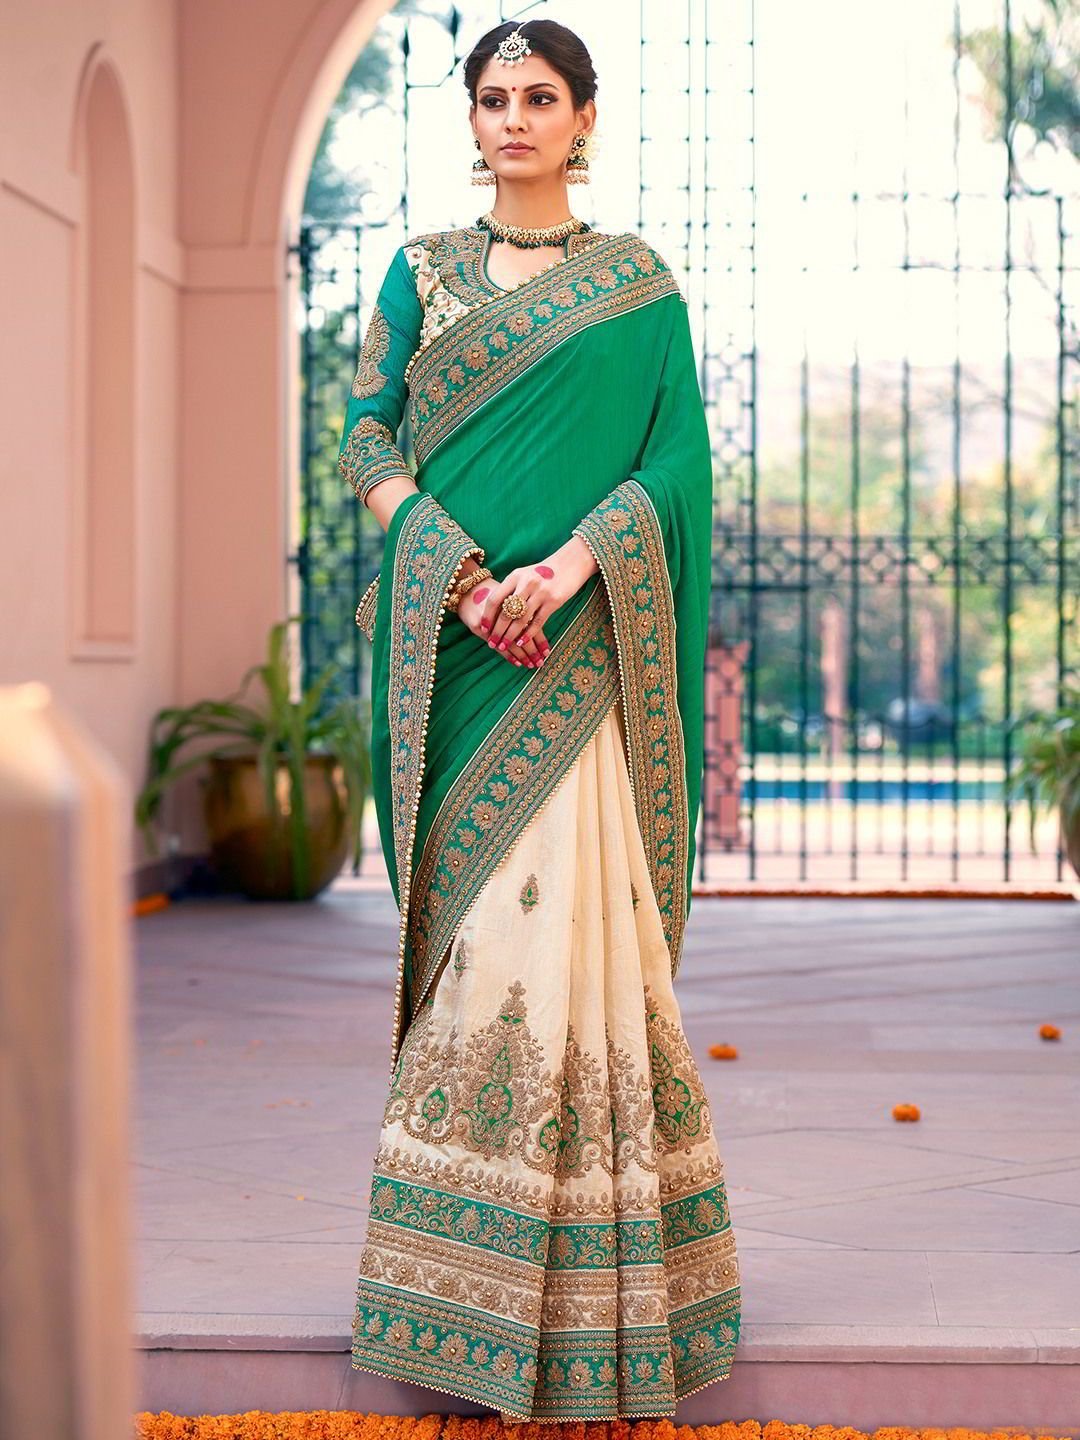 Одежда индии сари. Национальная одежда Индии Сари. Сарри одежда в Индии. Сари — Национальная женская одежда Индии. Сари (женская одежда в Индии).